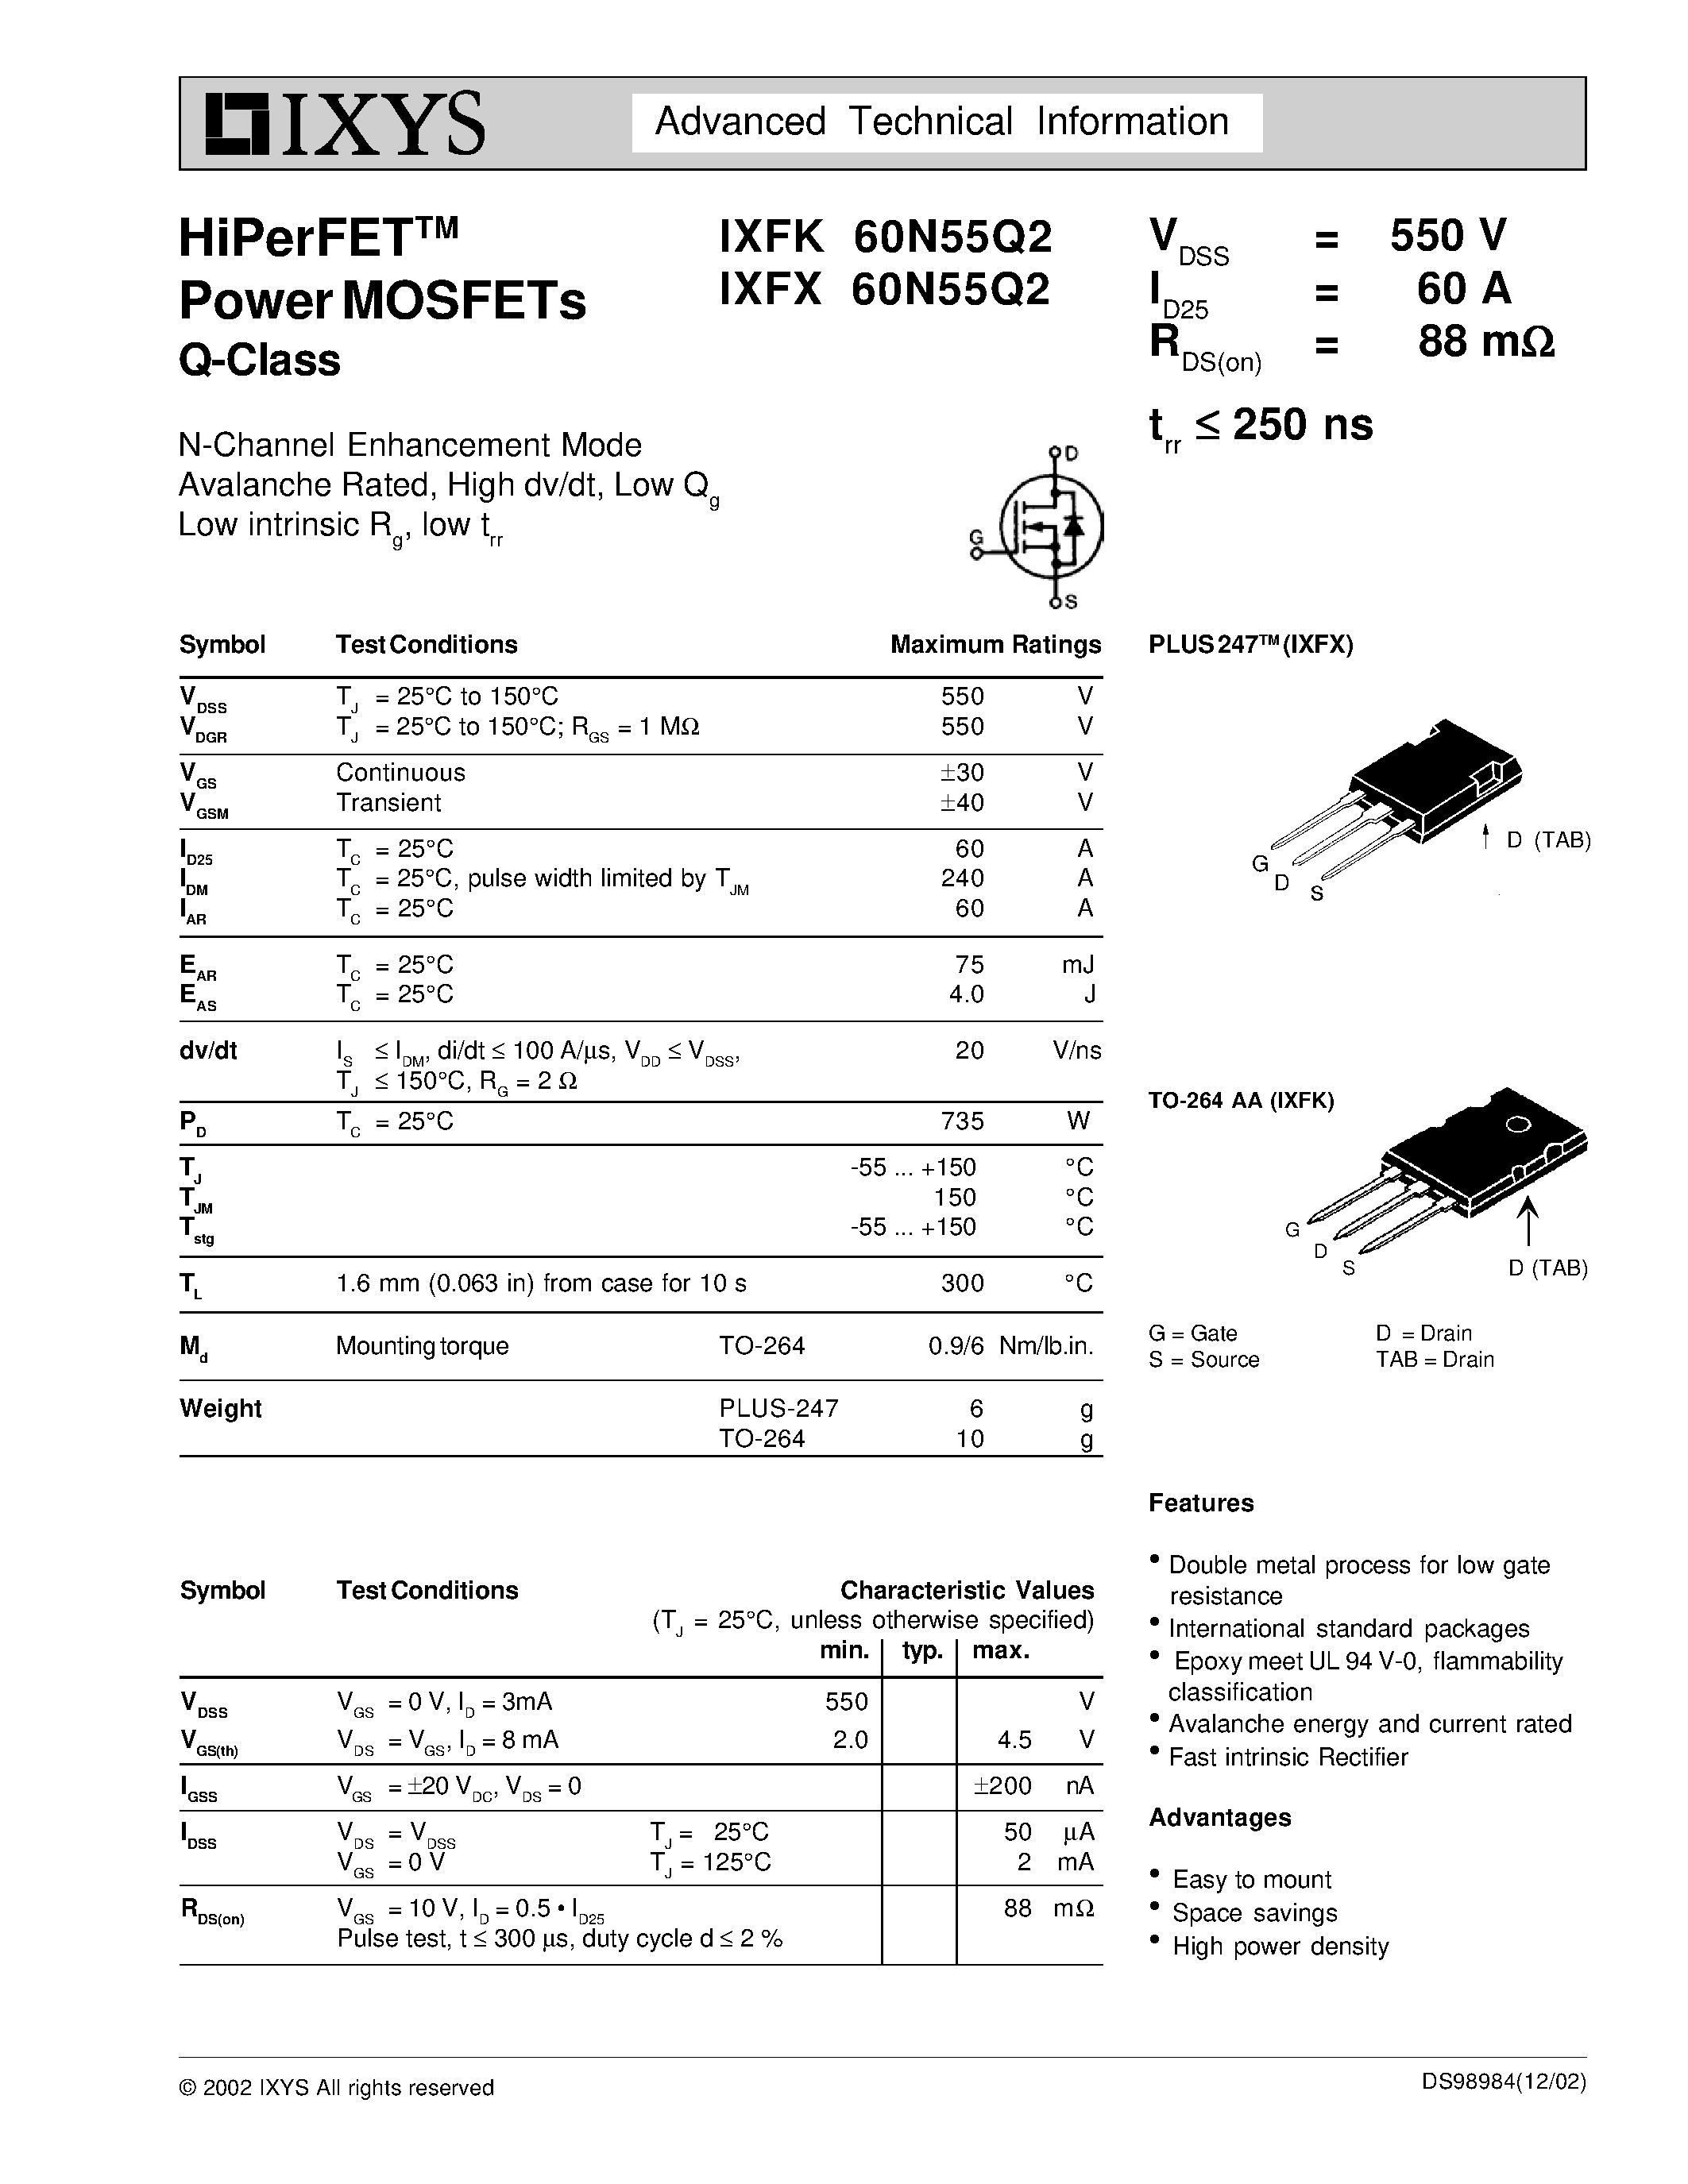 Даташит IXFX60N55Q2 - HiPerFET Power MOSFETs Q-Class страница 1